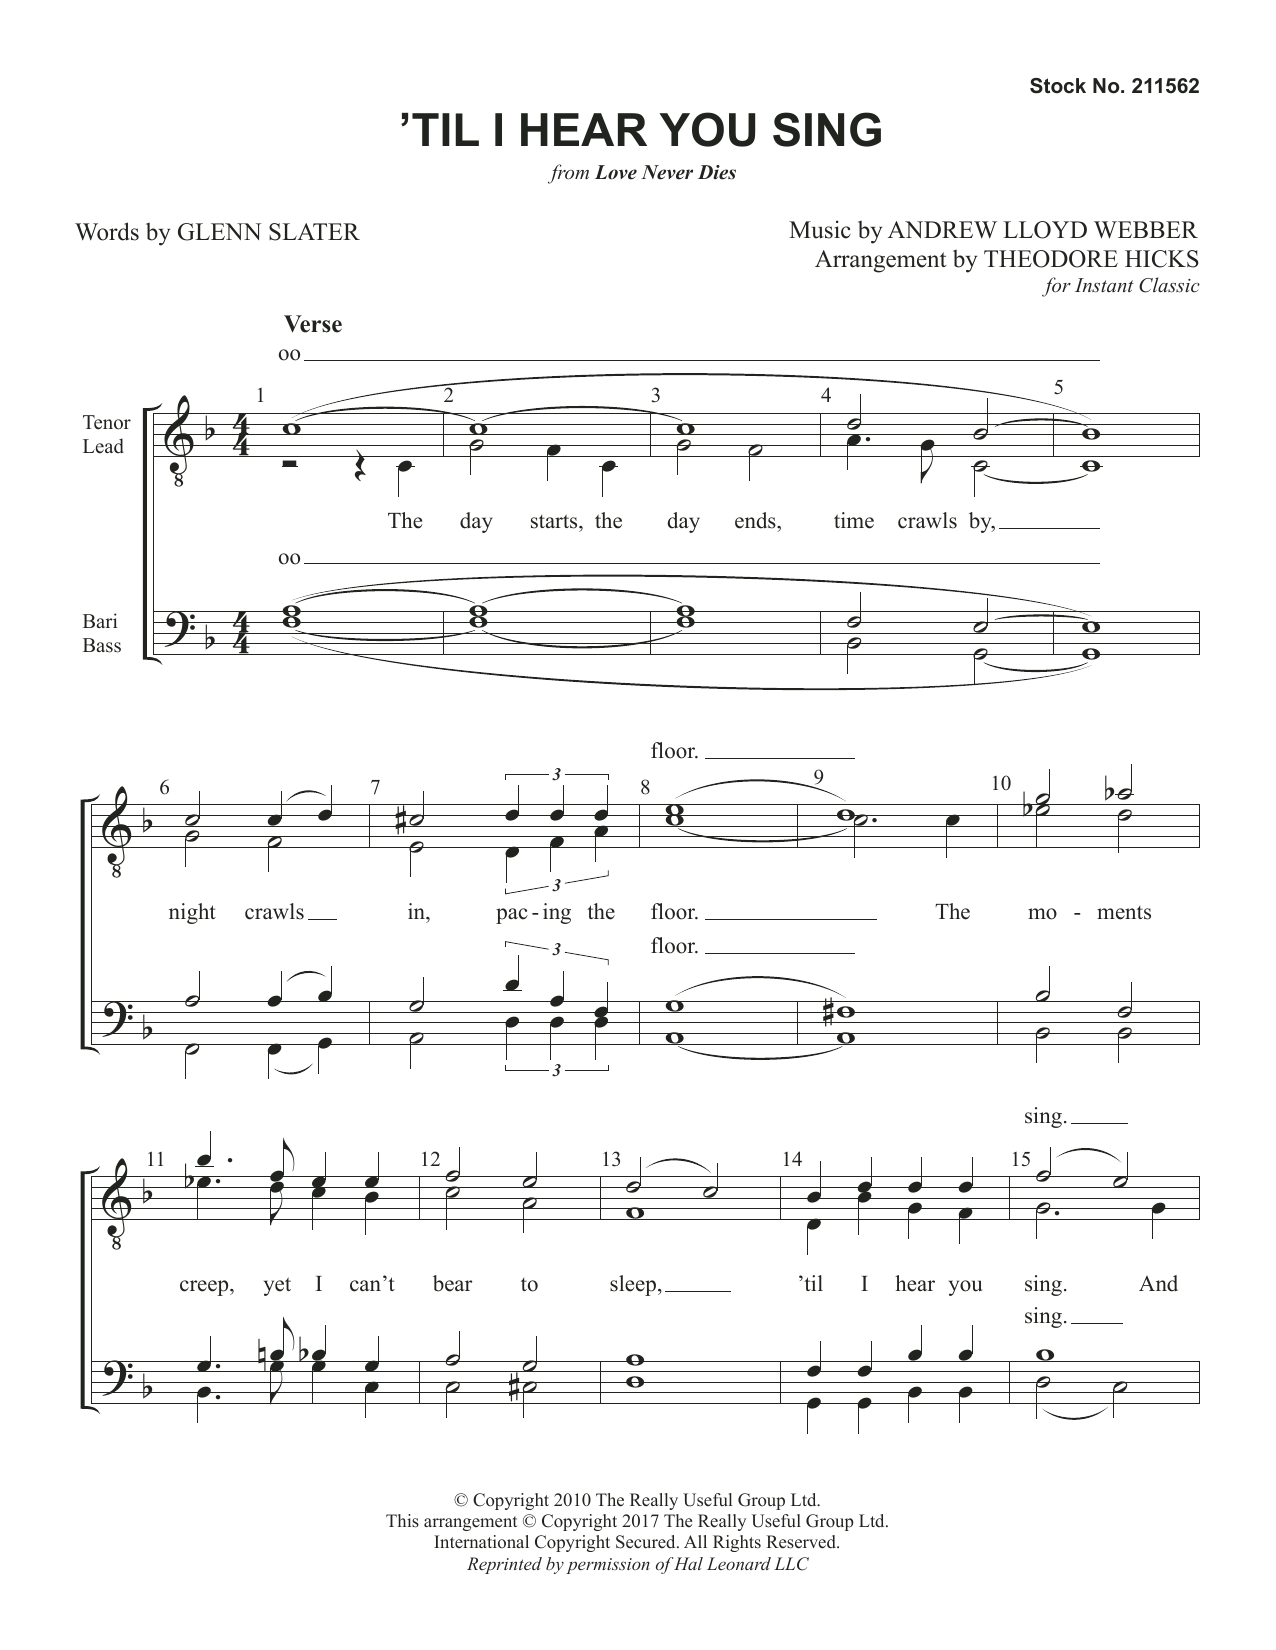 Andrew Lloyd Webber 'Til I Hear You Sing (from Love Never Dies) (arr. Theodore Hicks) Sheet Music Notes & Chords for TTBB Choir - Download or Print PDF